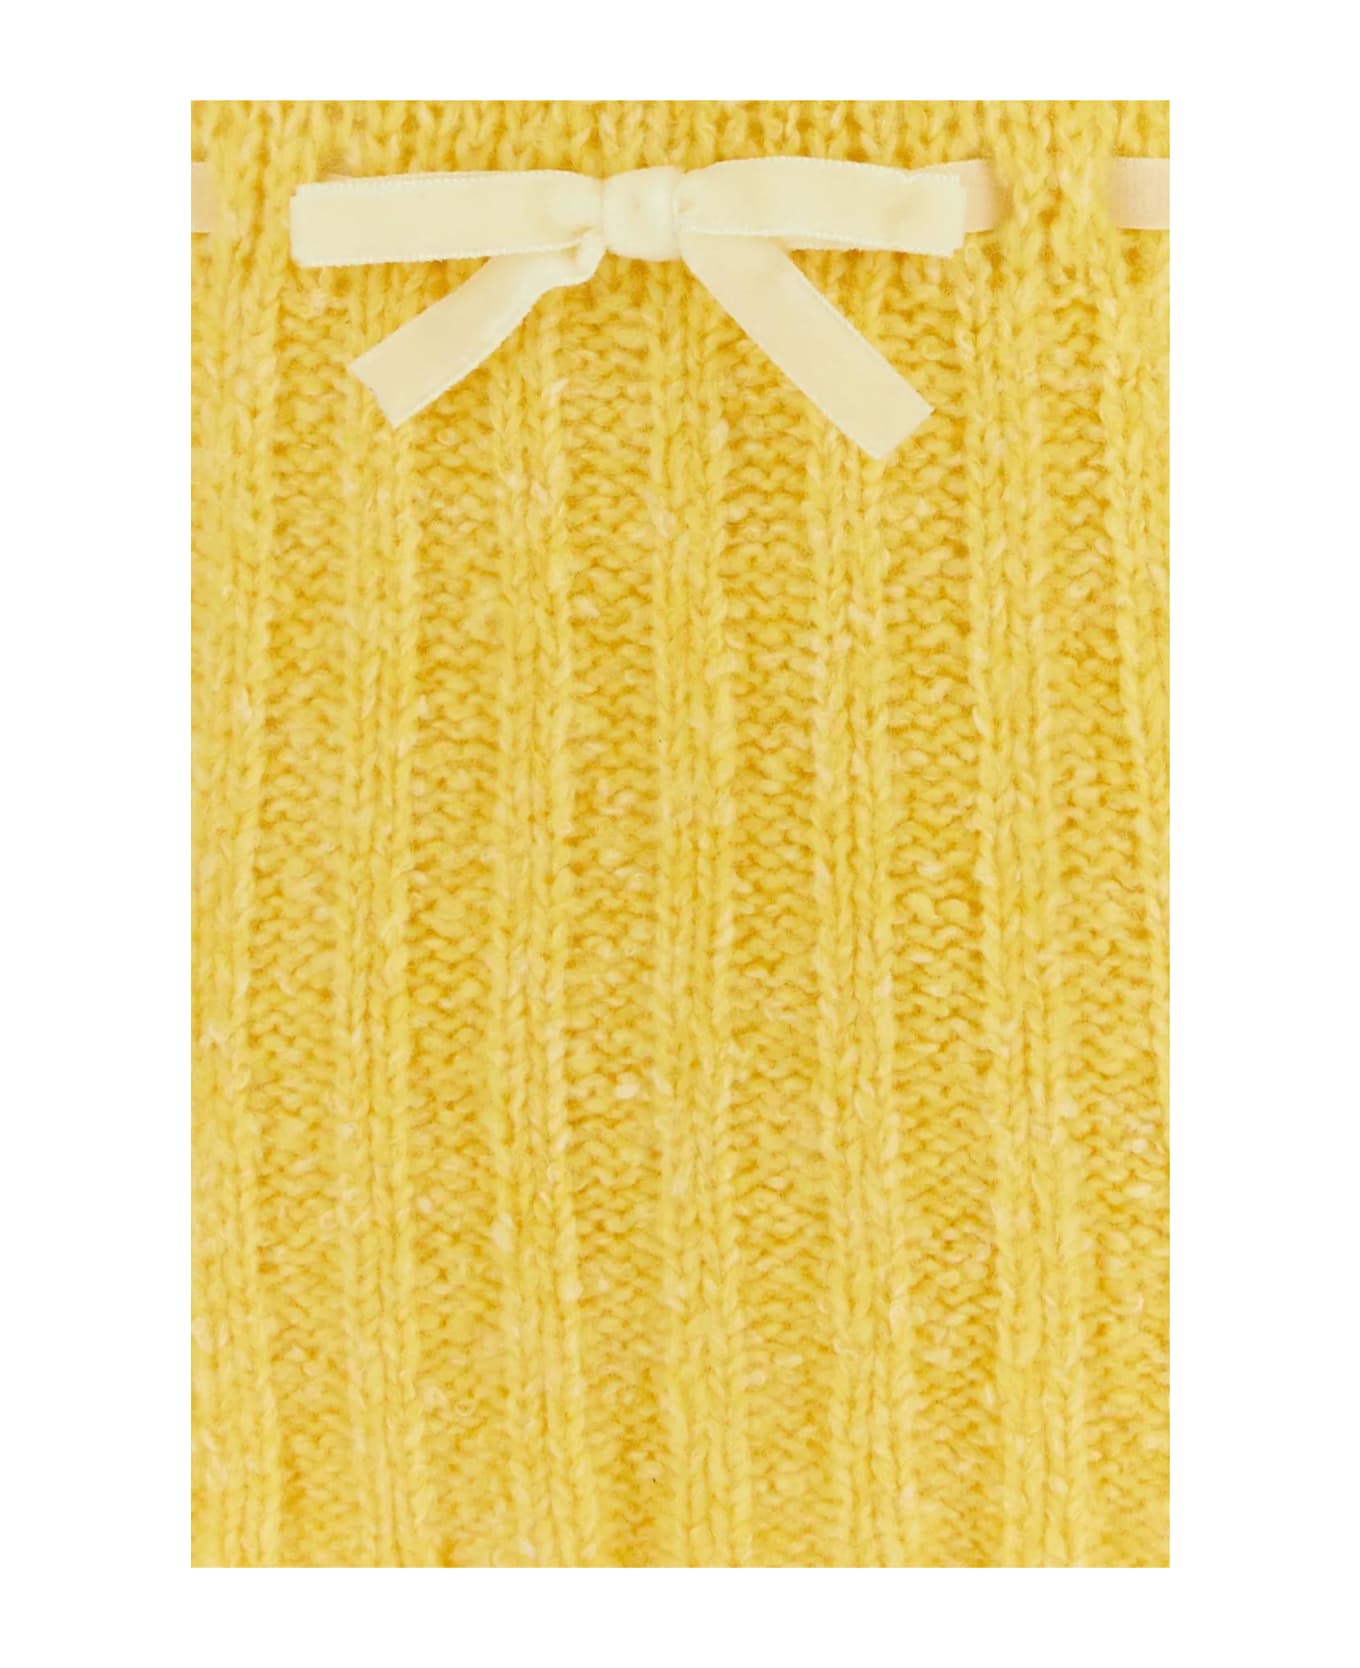 Cormio Yellow Wool Blend Sweater - yellow ニットウェア